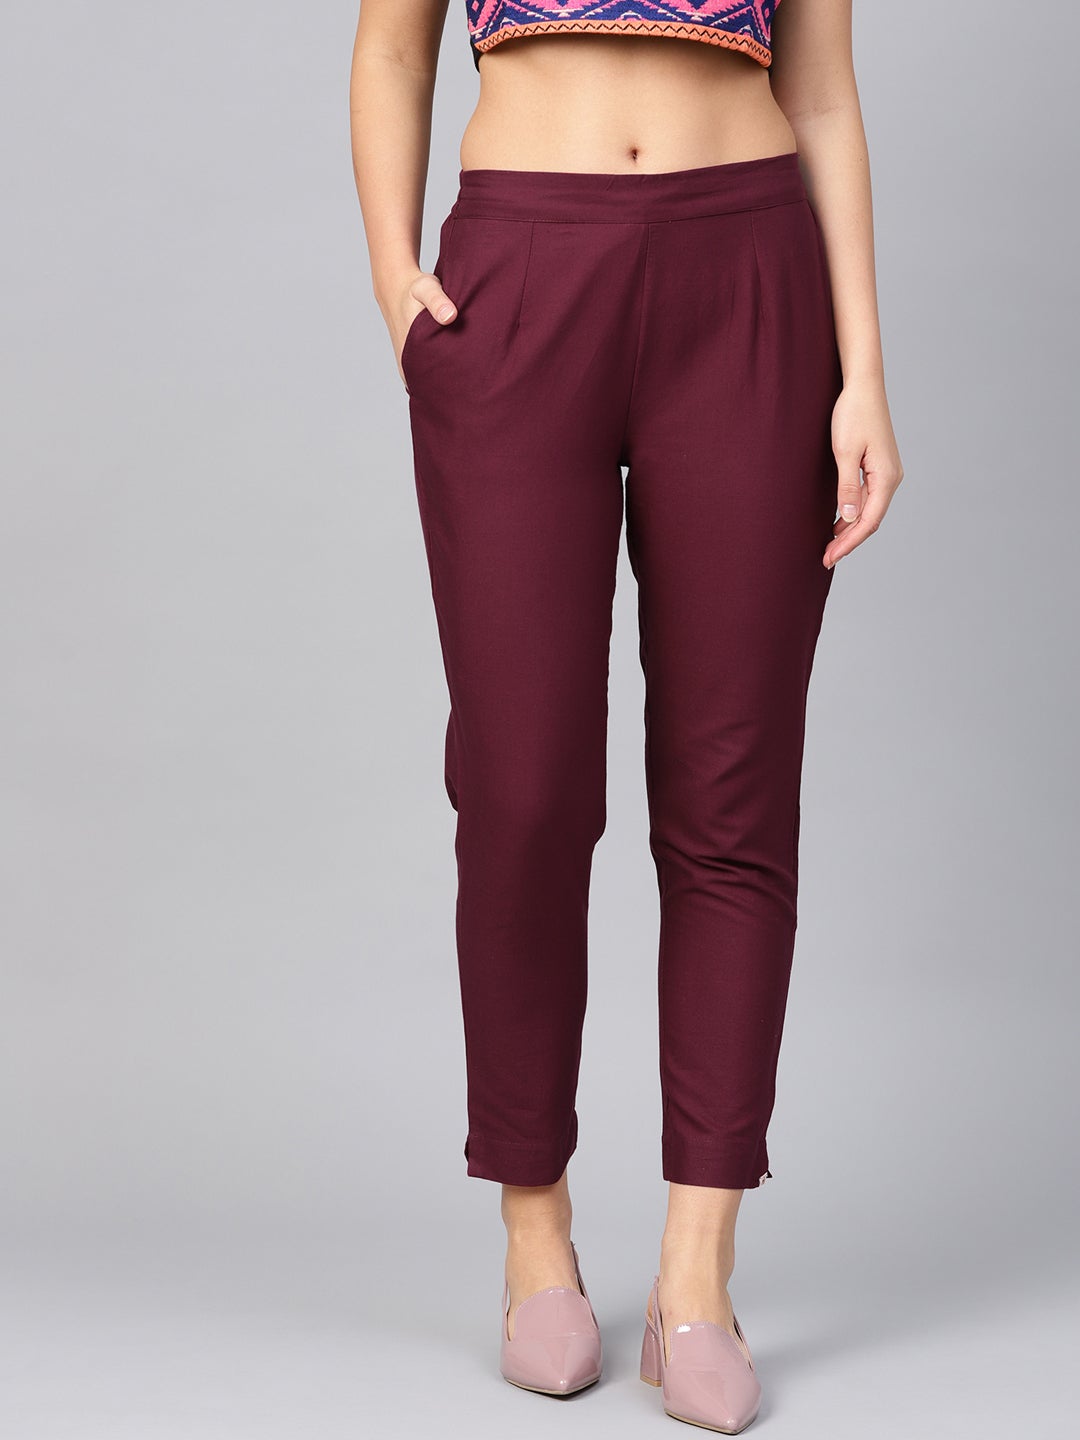 Juniper Burgundy Solid Cotton Flex Slim Fit Women Pants With Two Pockets